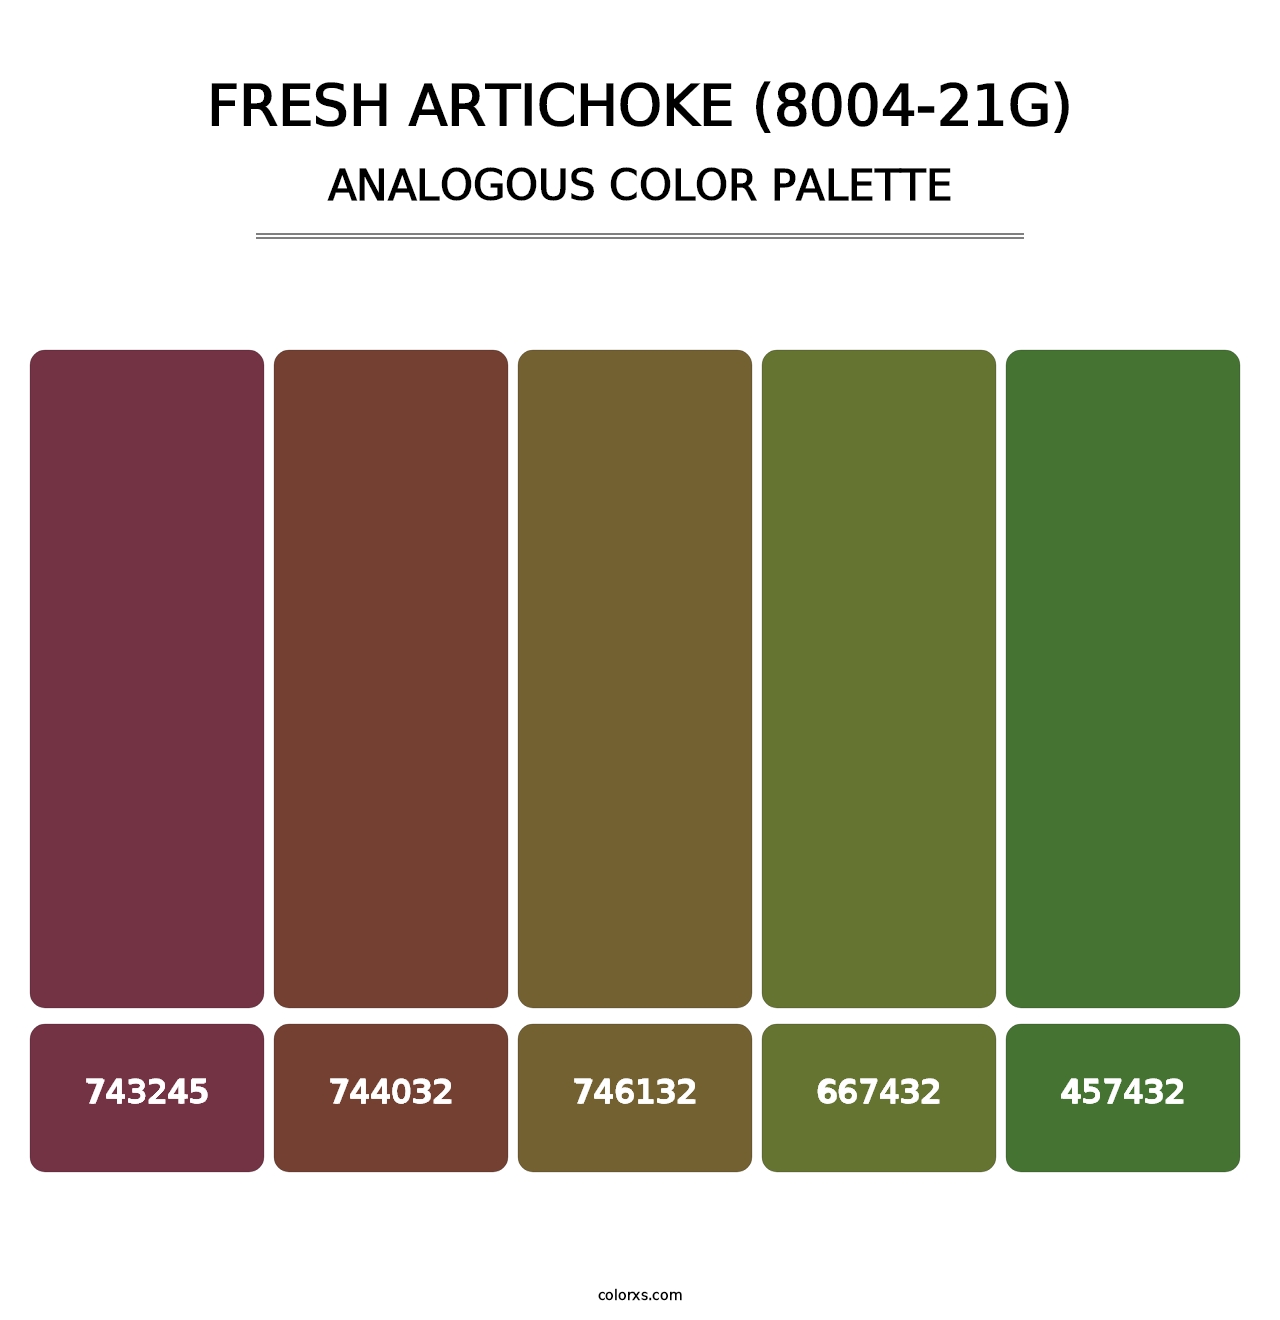 Fresh Artichoke (8004-21G) - Analogous Color Palette